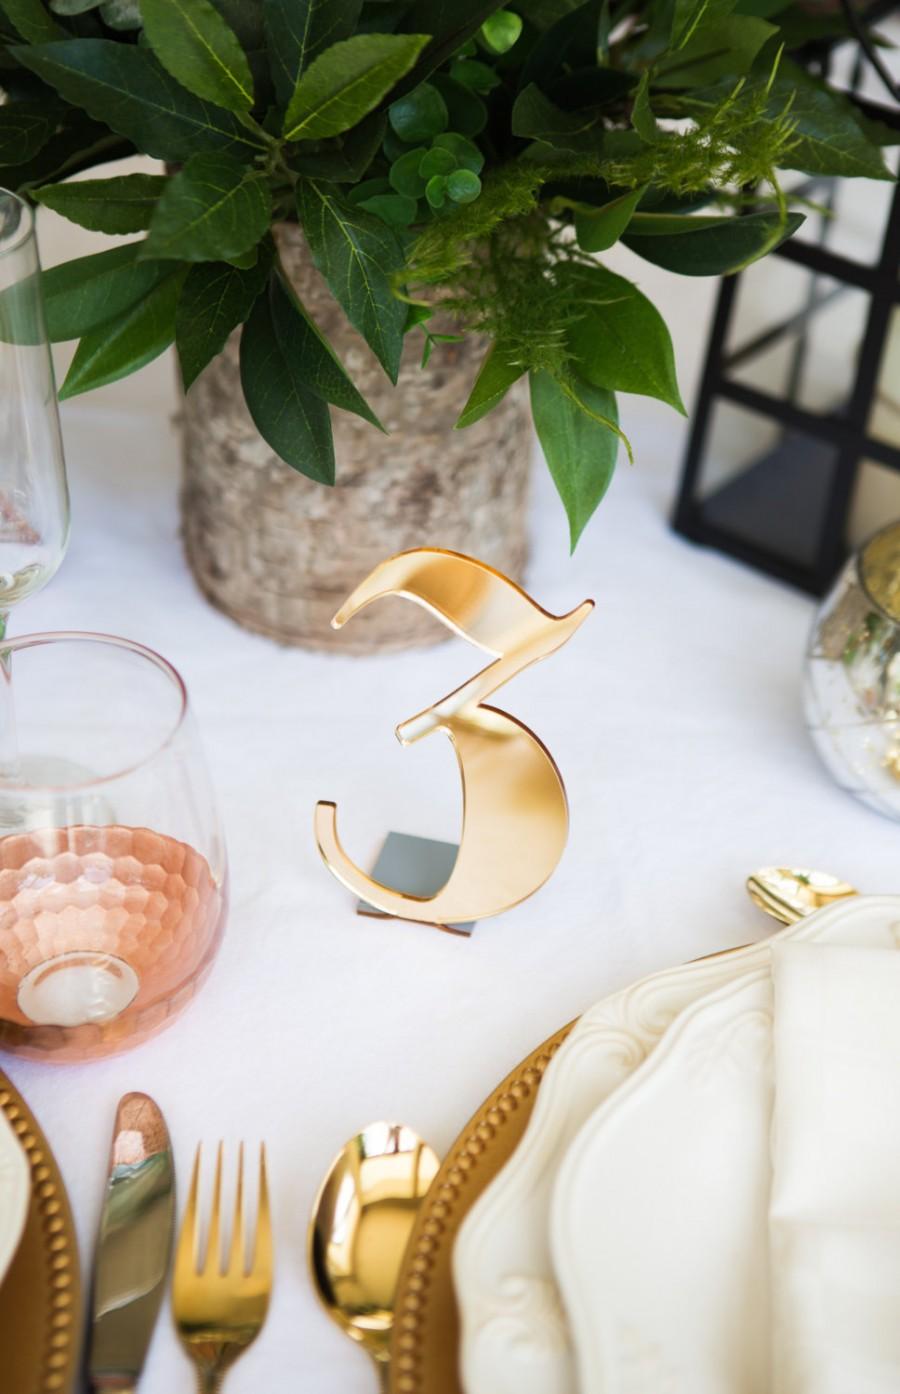 زفاف - Acrylic Table Numbers for Weddings and Events - Standing Numbers Gold, Silver, Clear Acrylic Chic Wedding Decor Centerpieces (Item - ACB100)